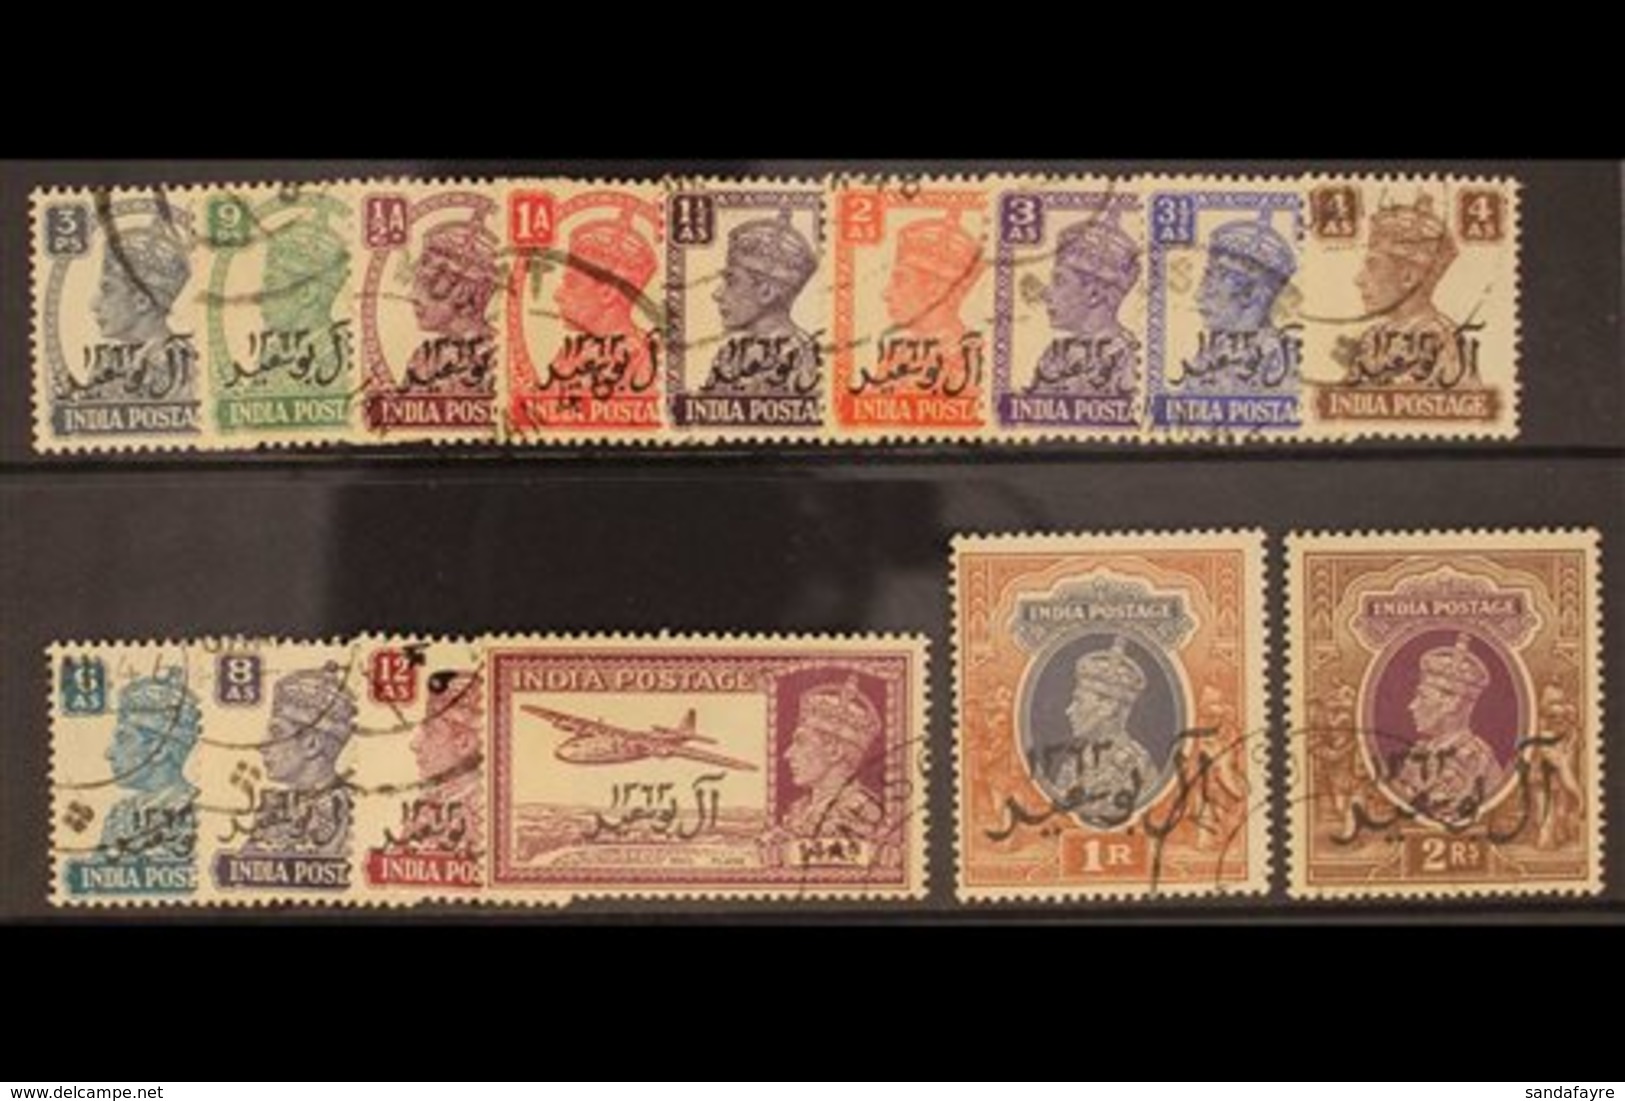 1944 Geo VI Set Ovptd Bicent. Of Al-Busaid Dynasty, Postage Set Complete, SG 1/15, Very Fine Used. (15 Stamps) For More  - Oman